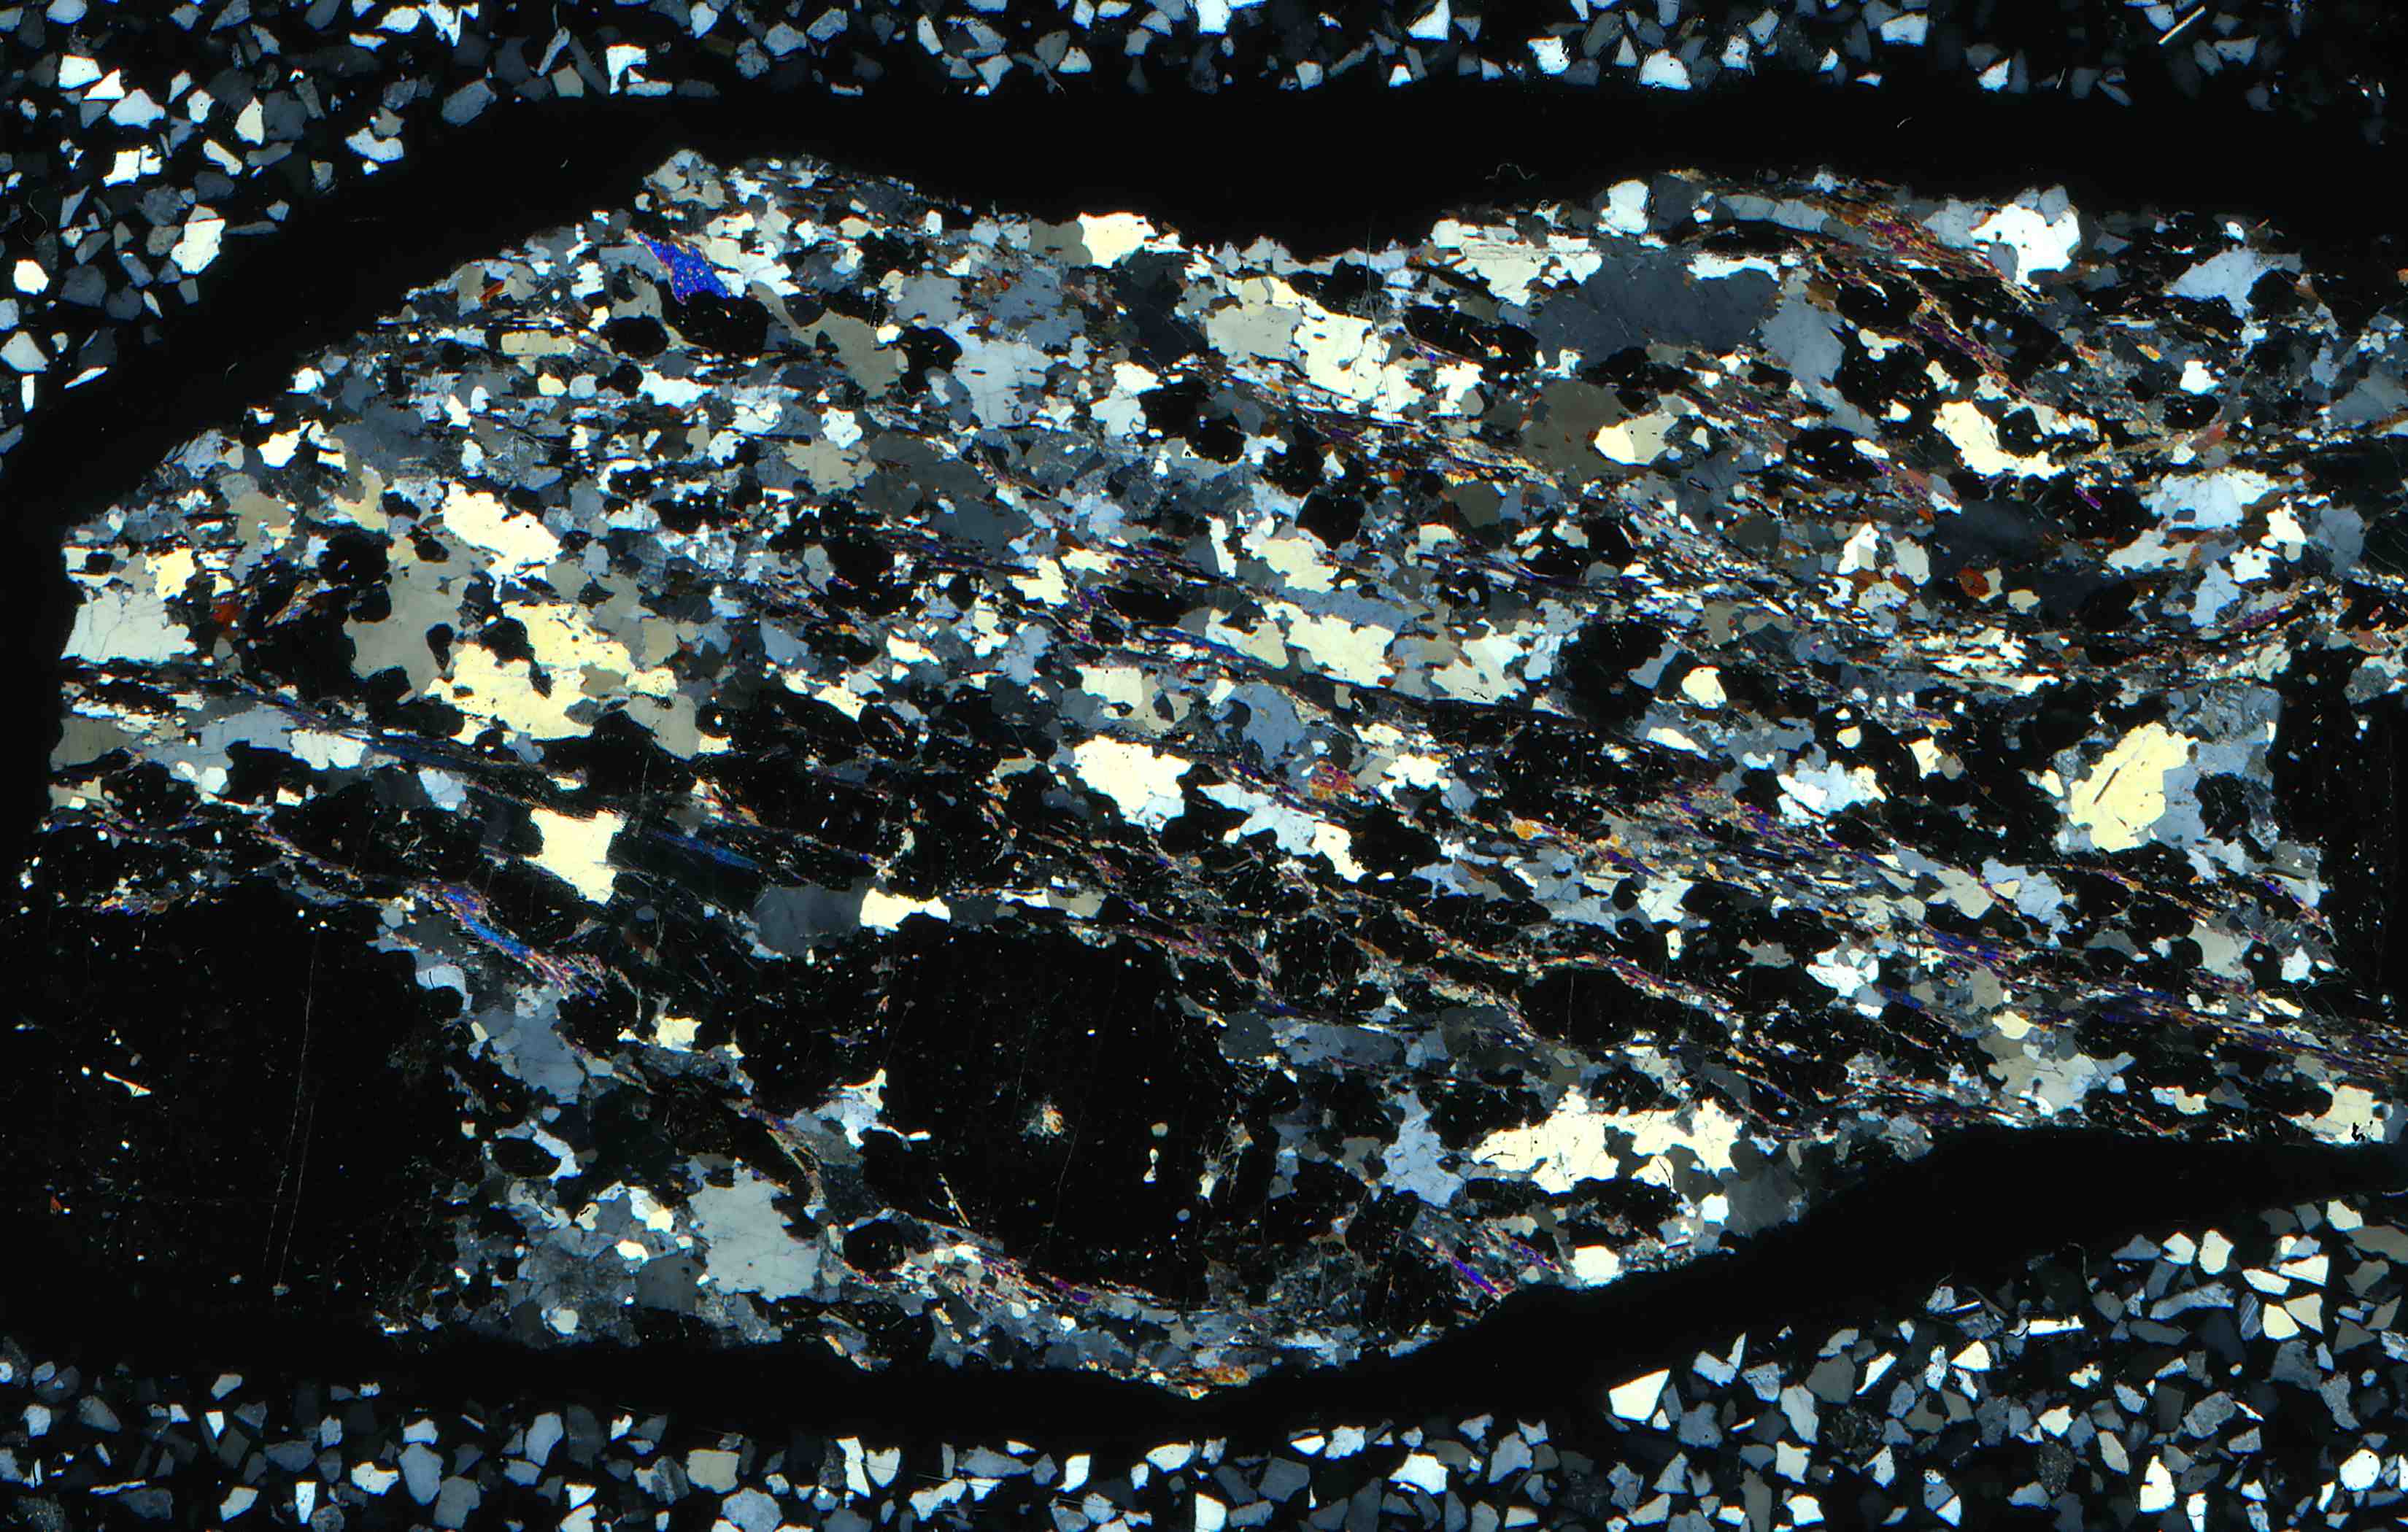 Warren county New York garnet sillimanite granulite in thin section